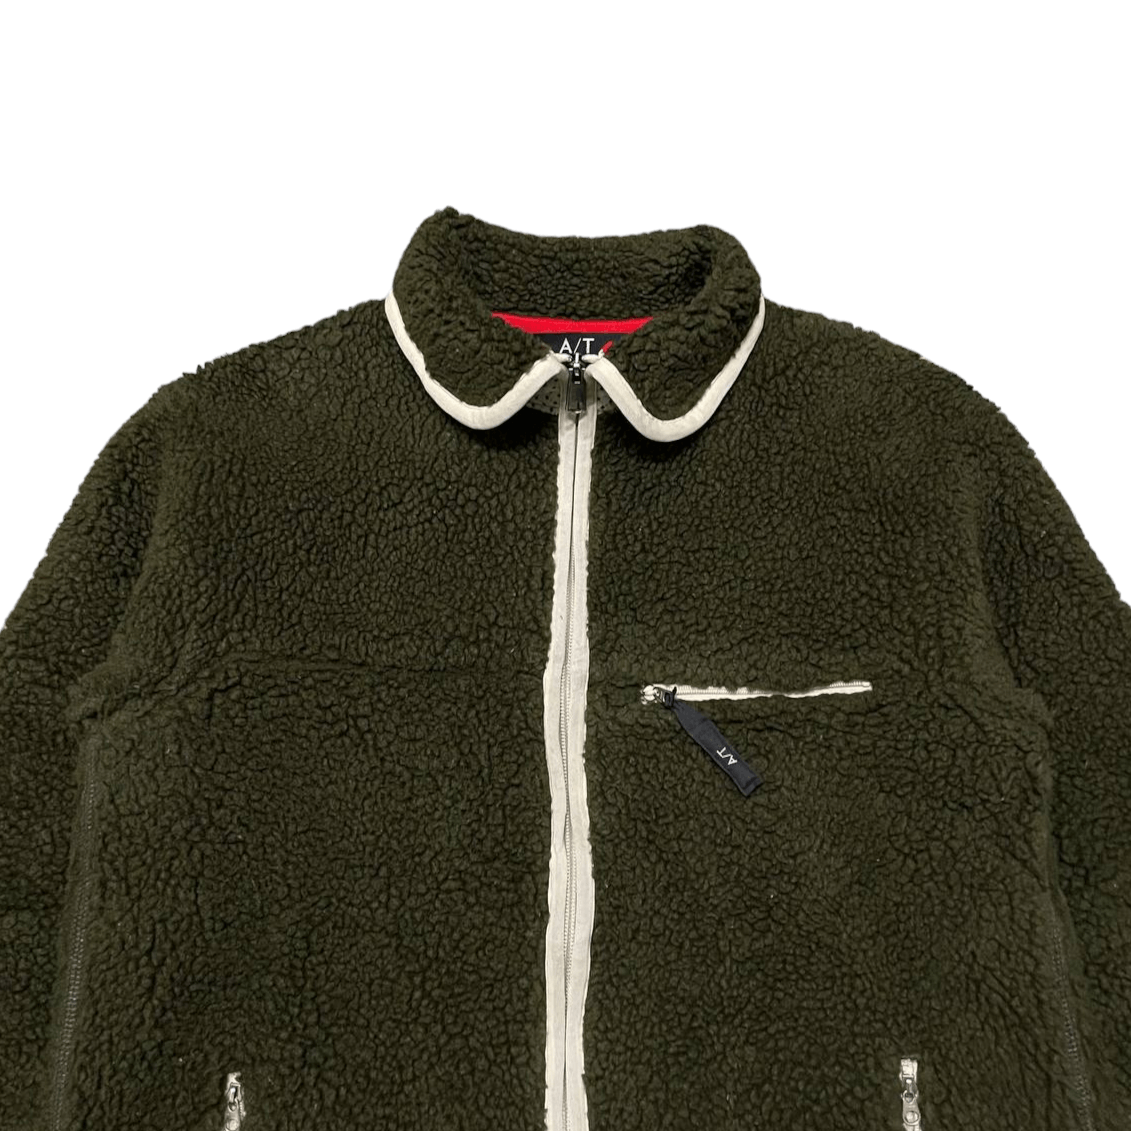 A/T Atsuro Tayama Pile Poil Fleece Jacket - 2